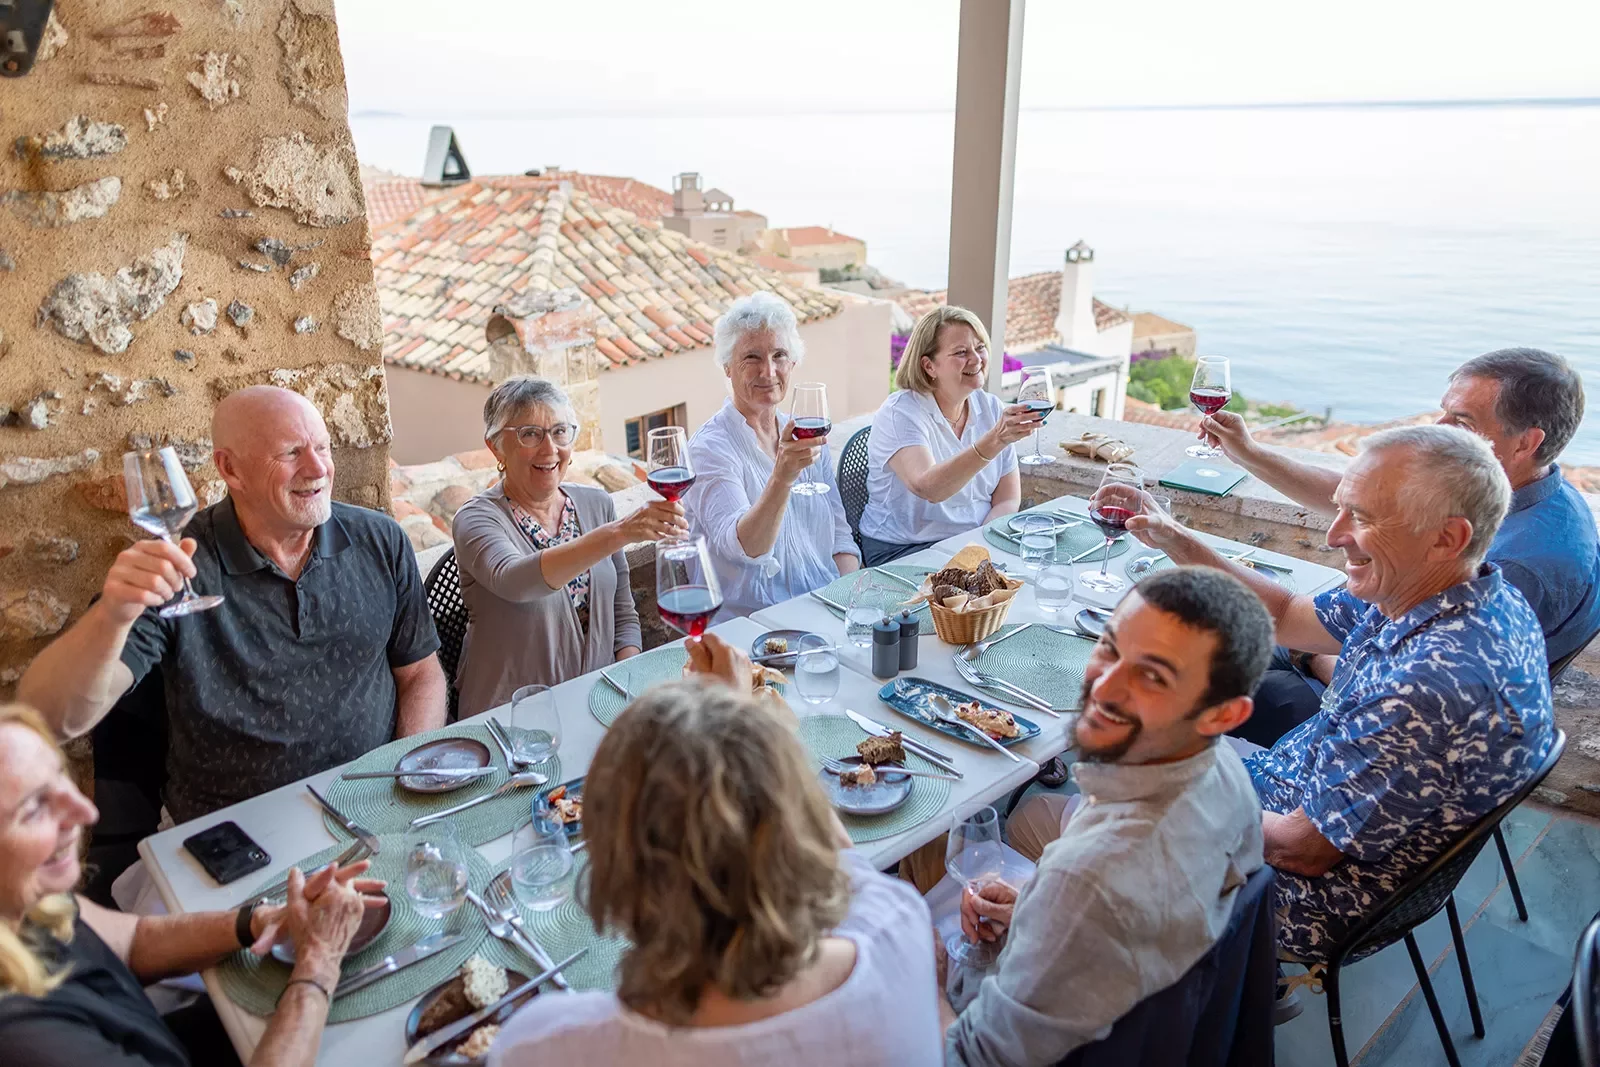 Guests at dinner table, all cheersing wine glasses, overlooking ocean.